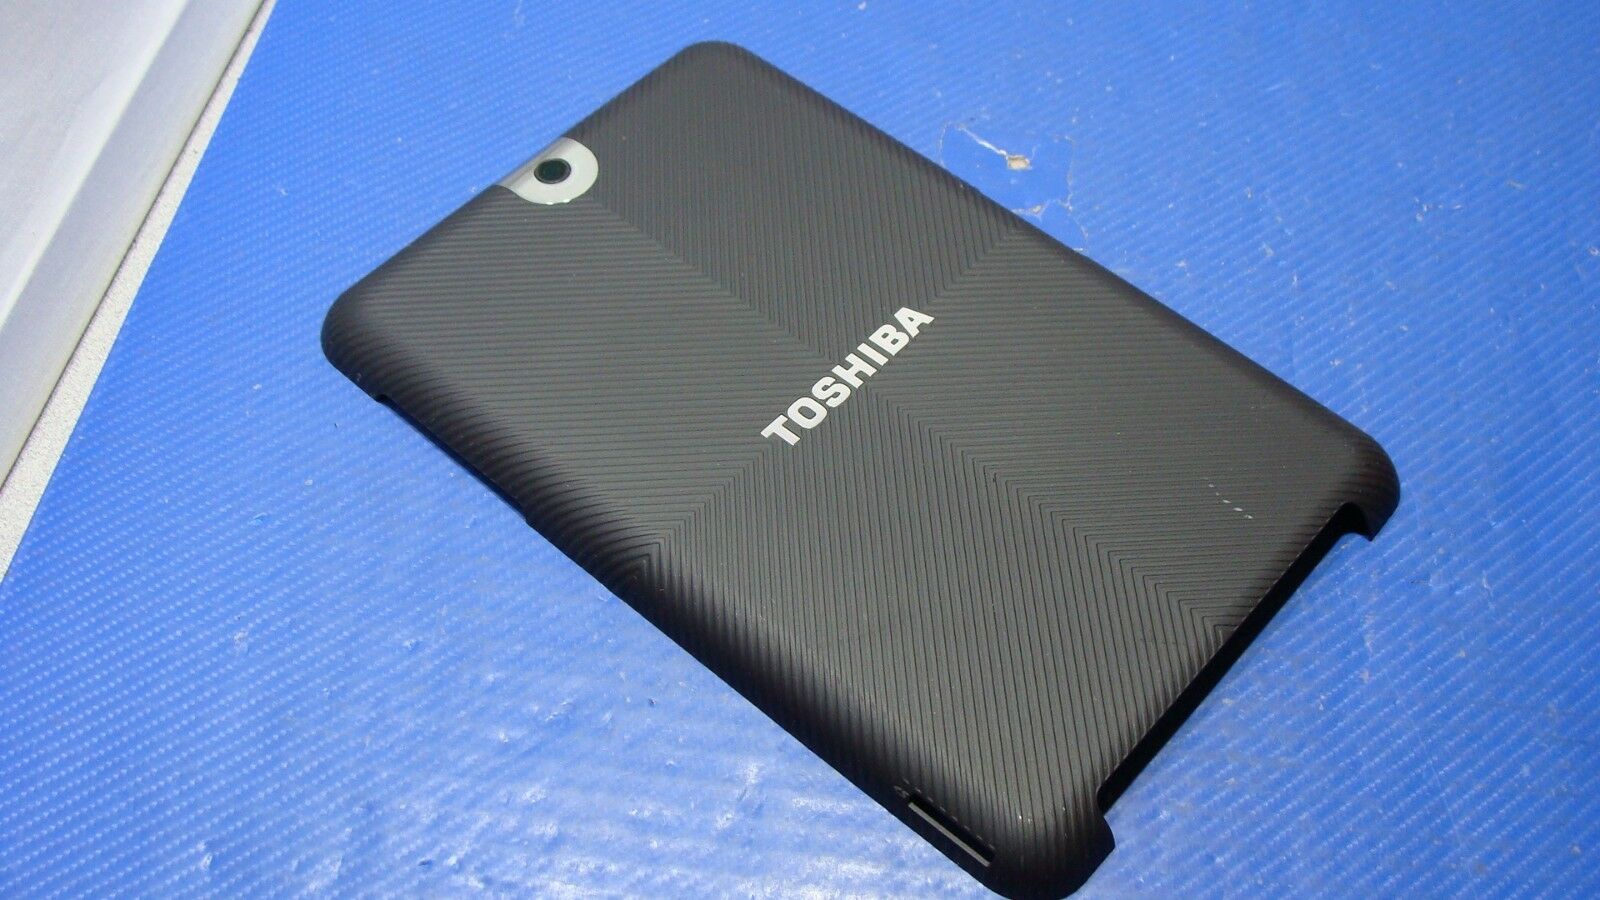 Toshiba Thrive AT105-T1016 10.1